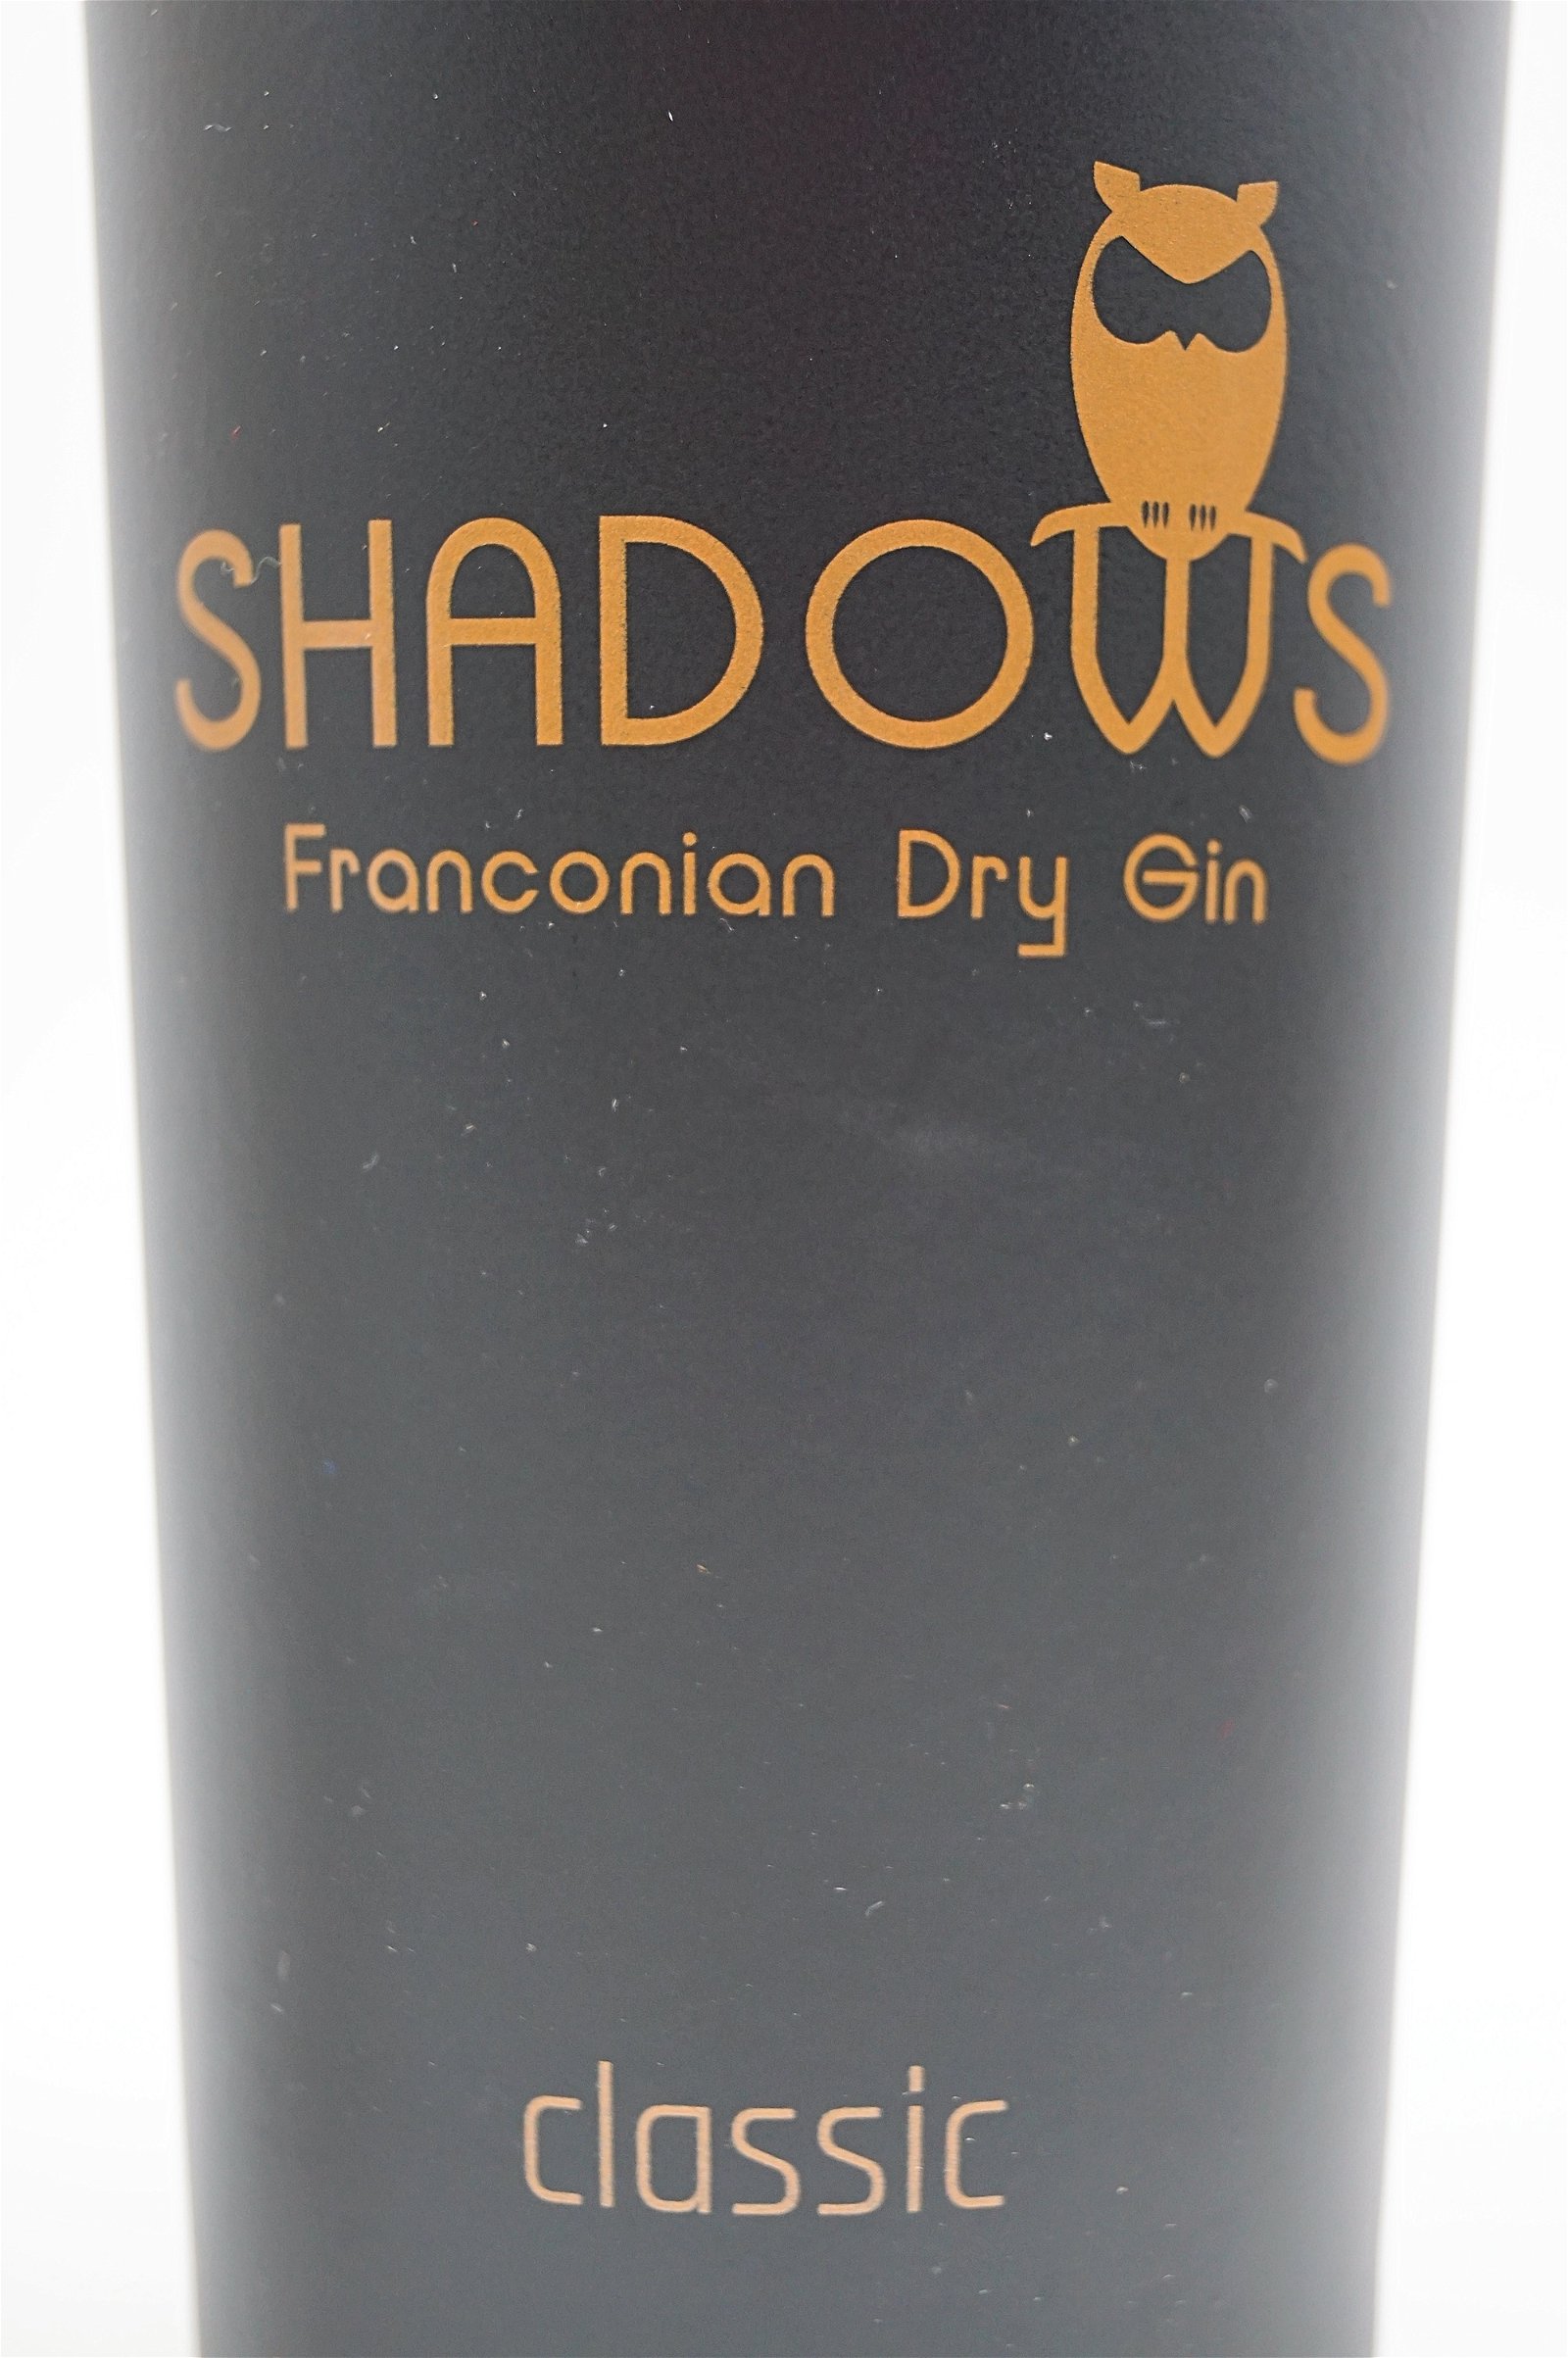 Shadows Franconian Dry Gin